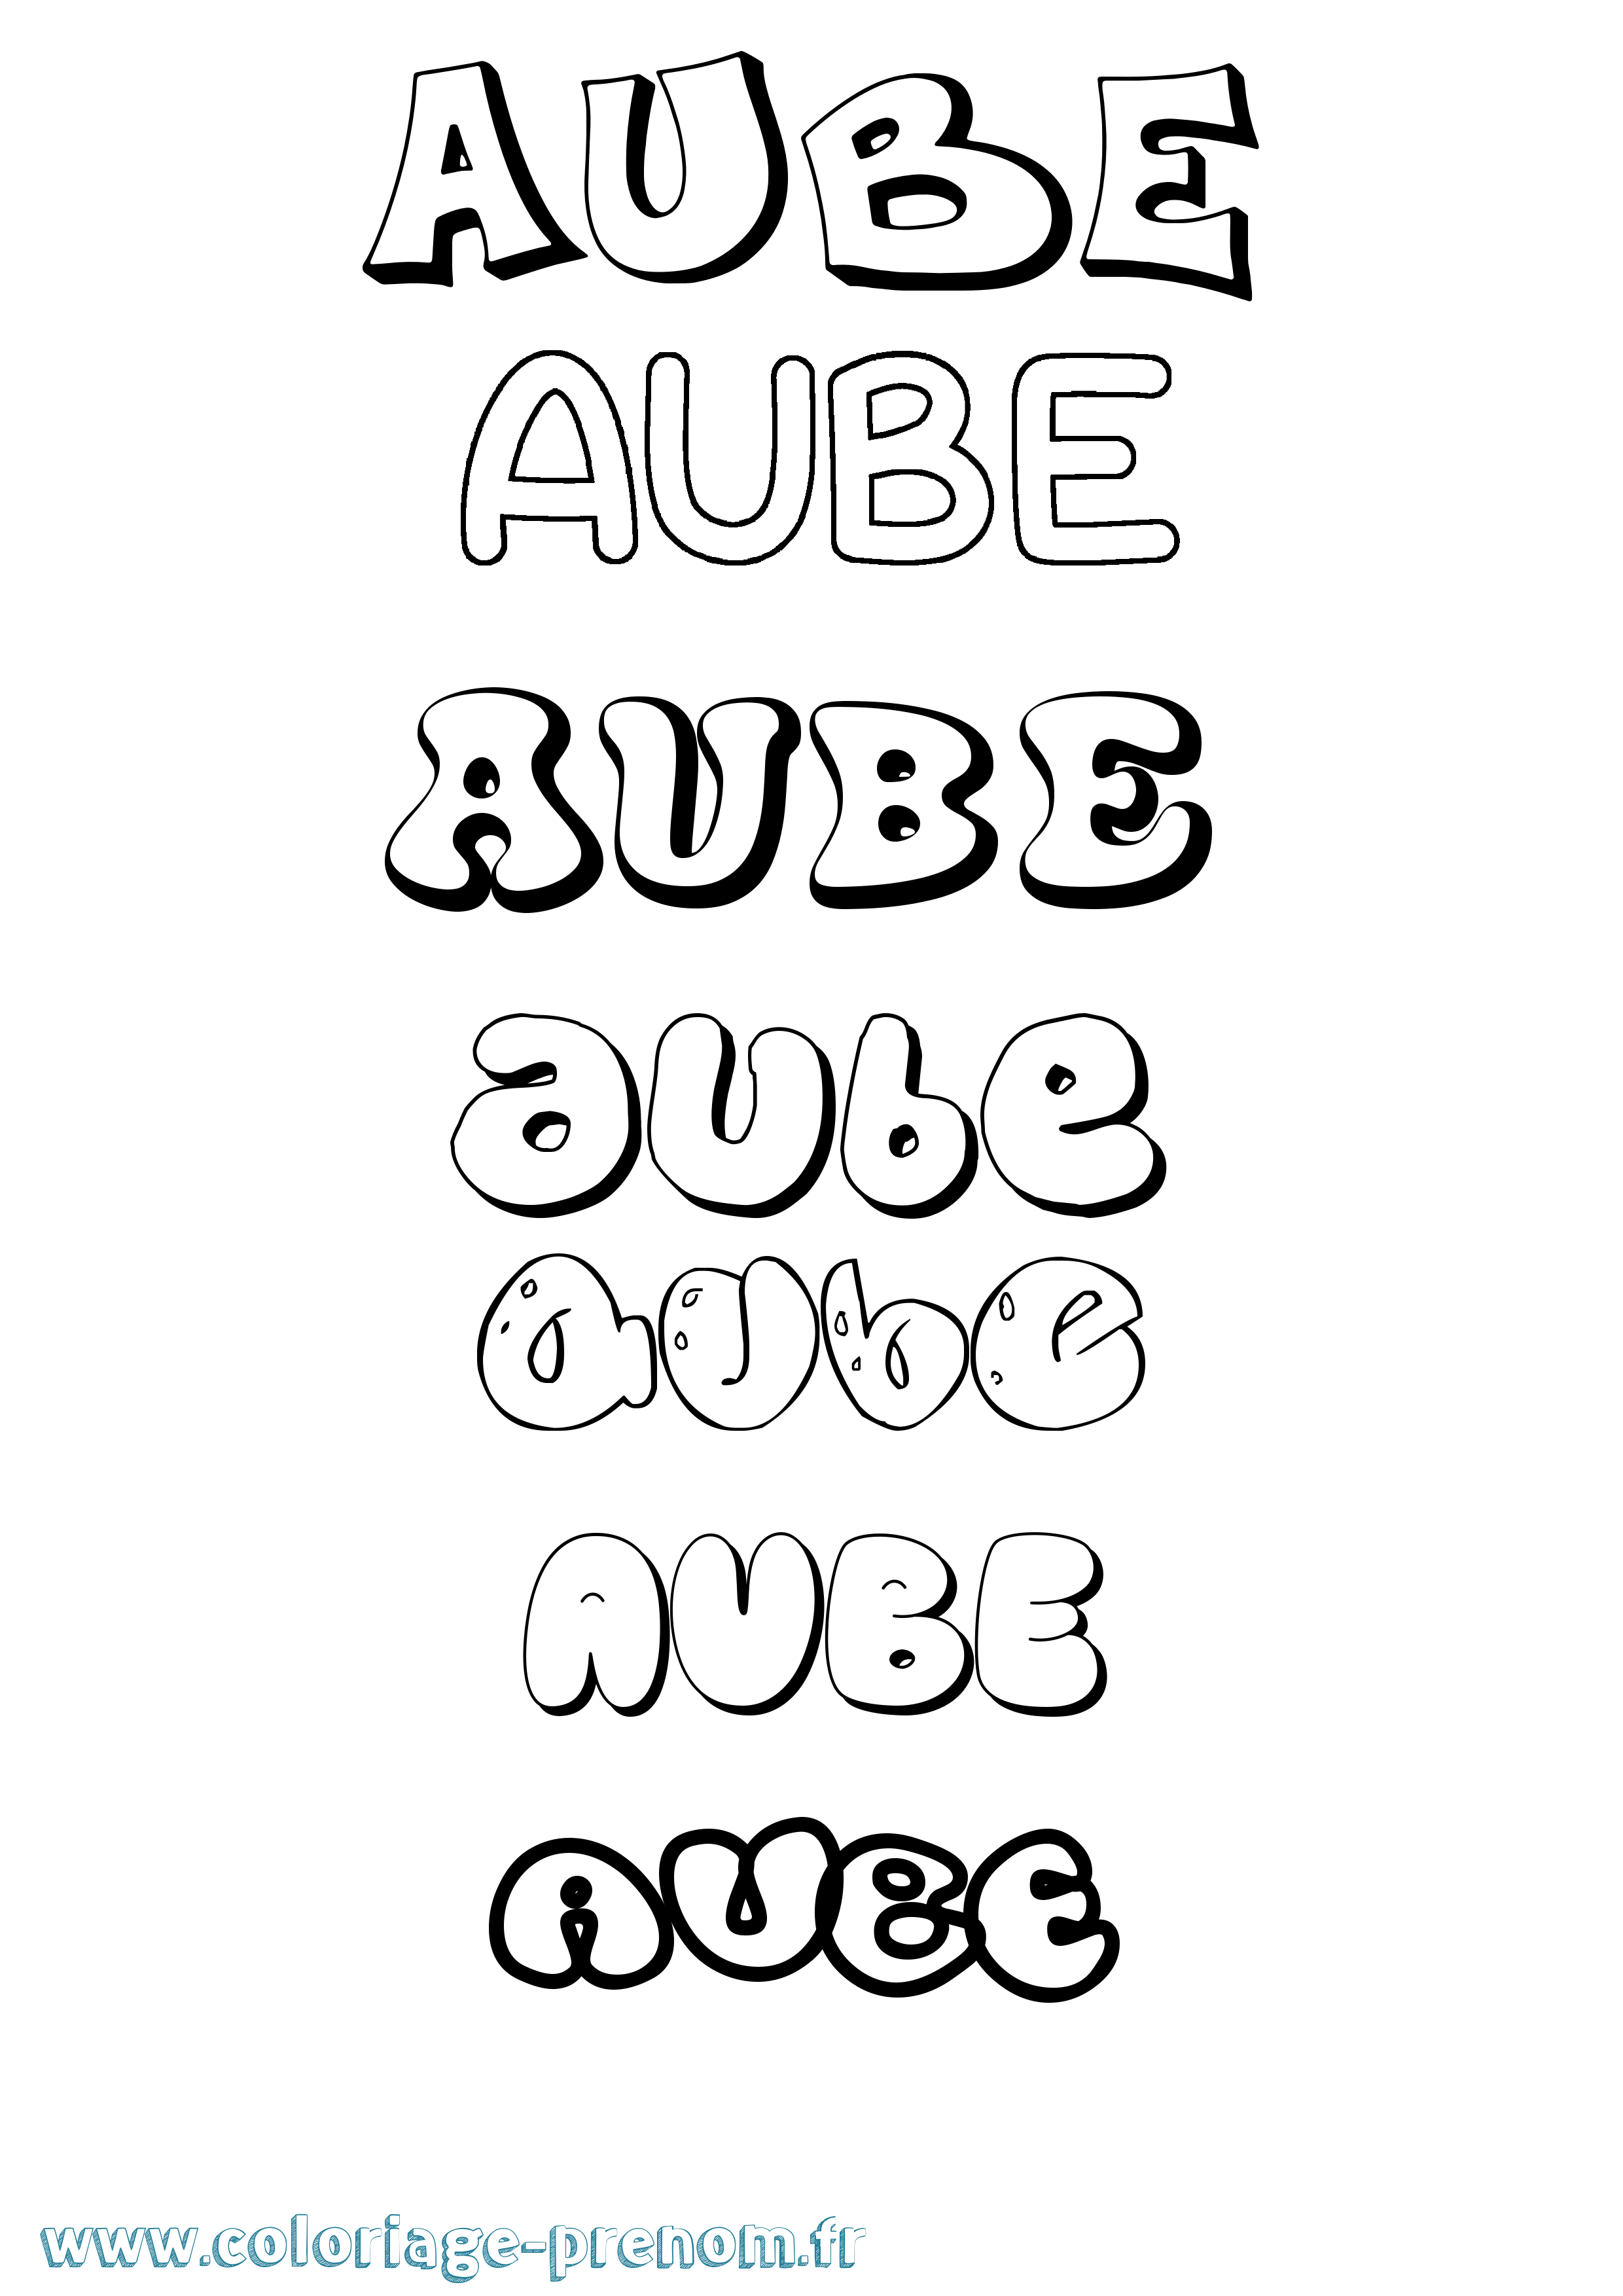 Coloriage prénom Aube Bubble